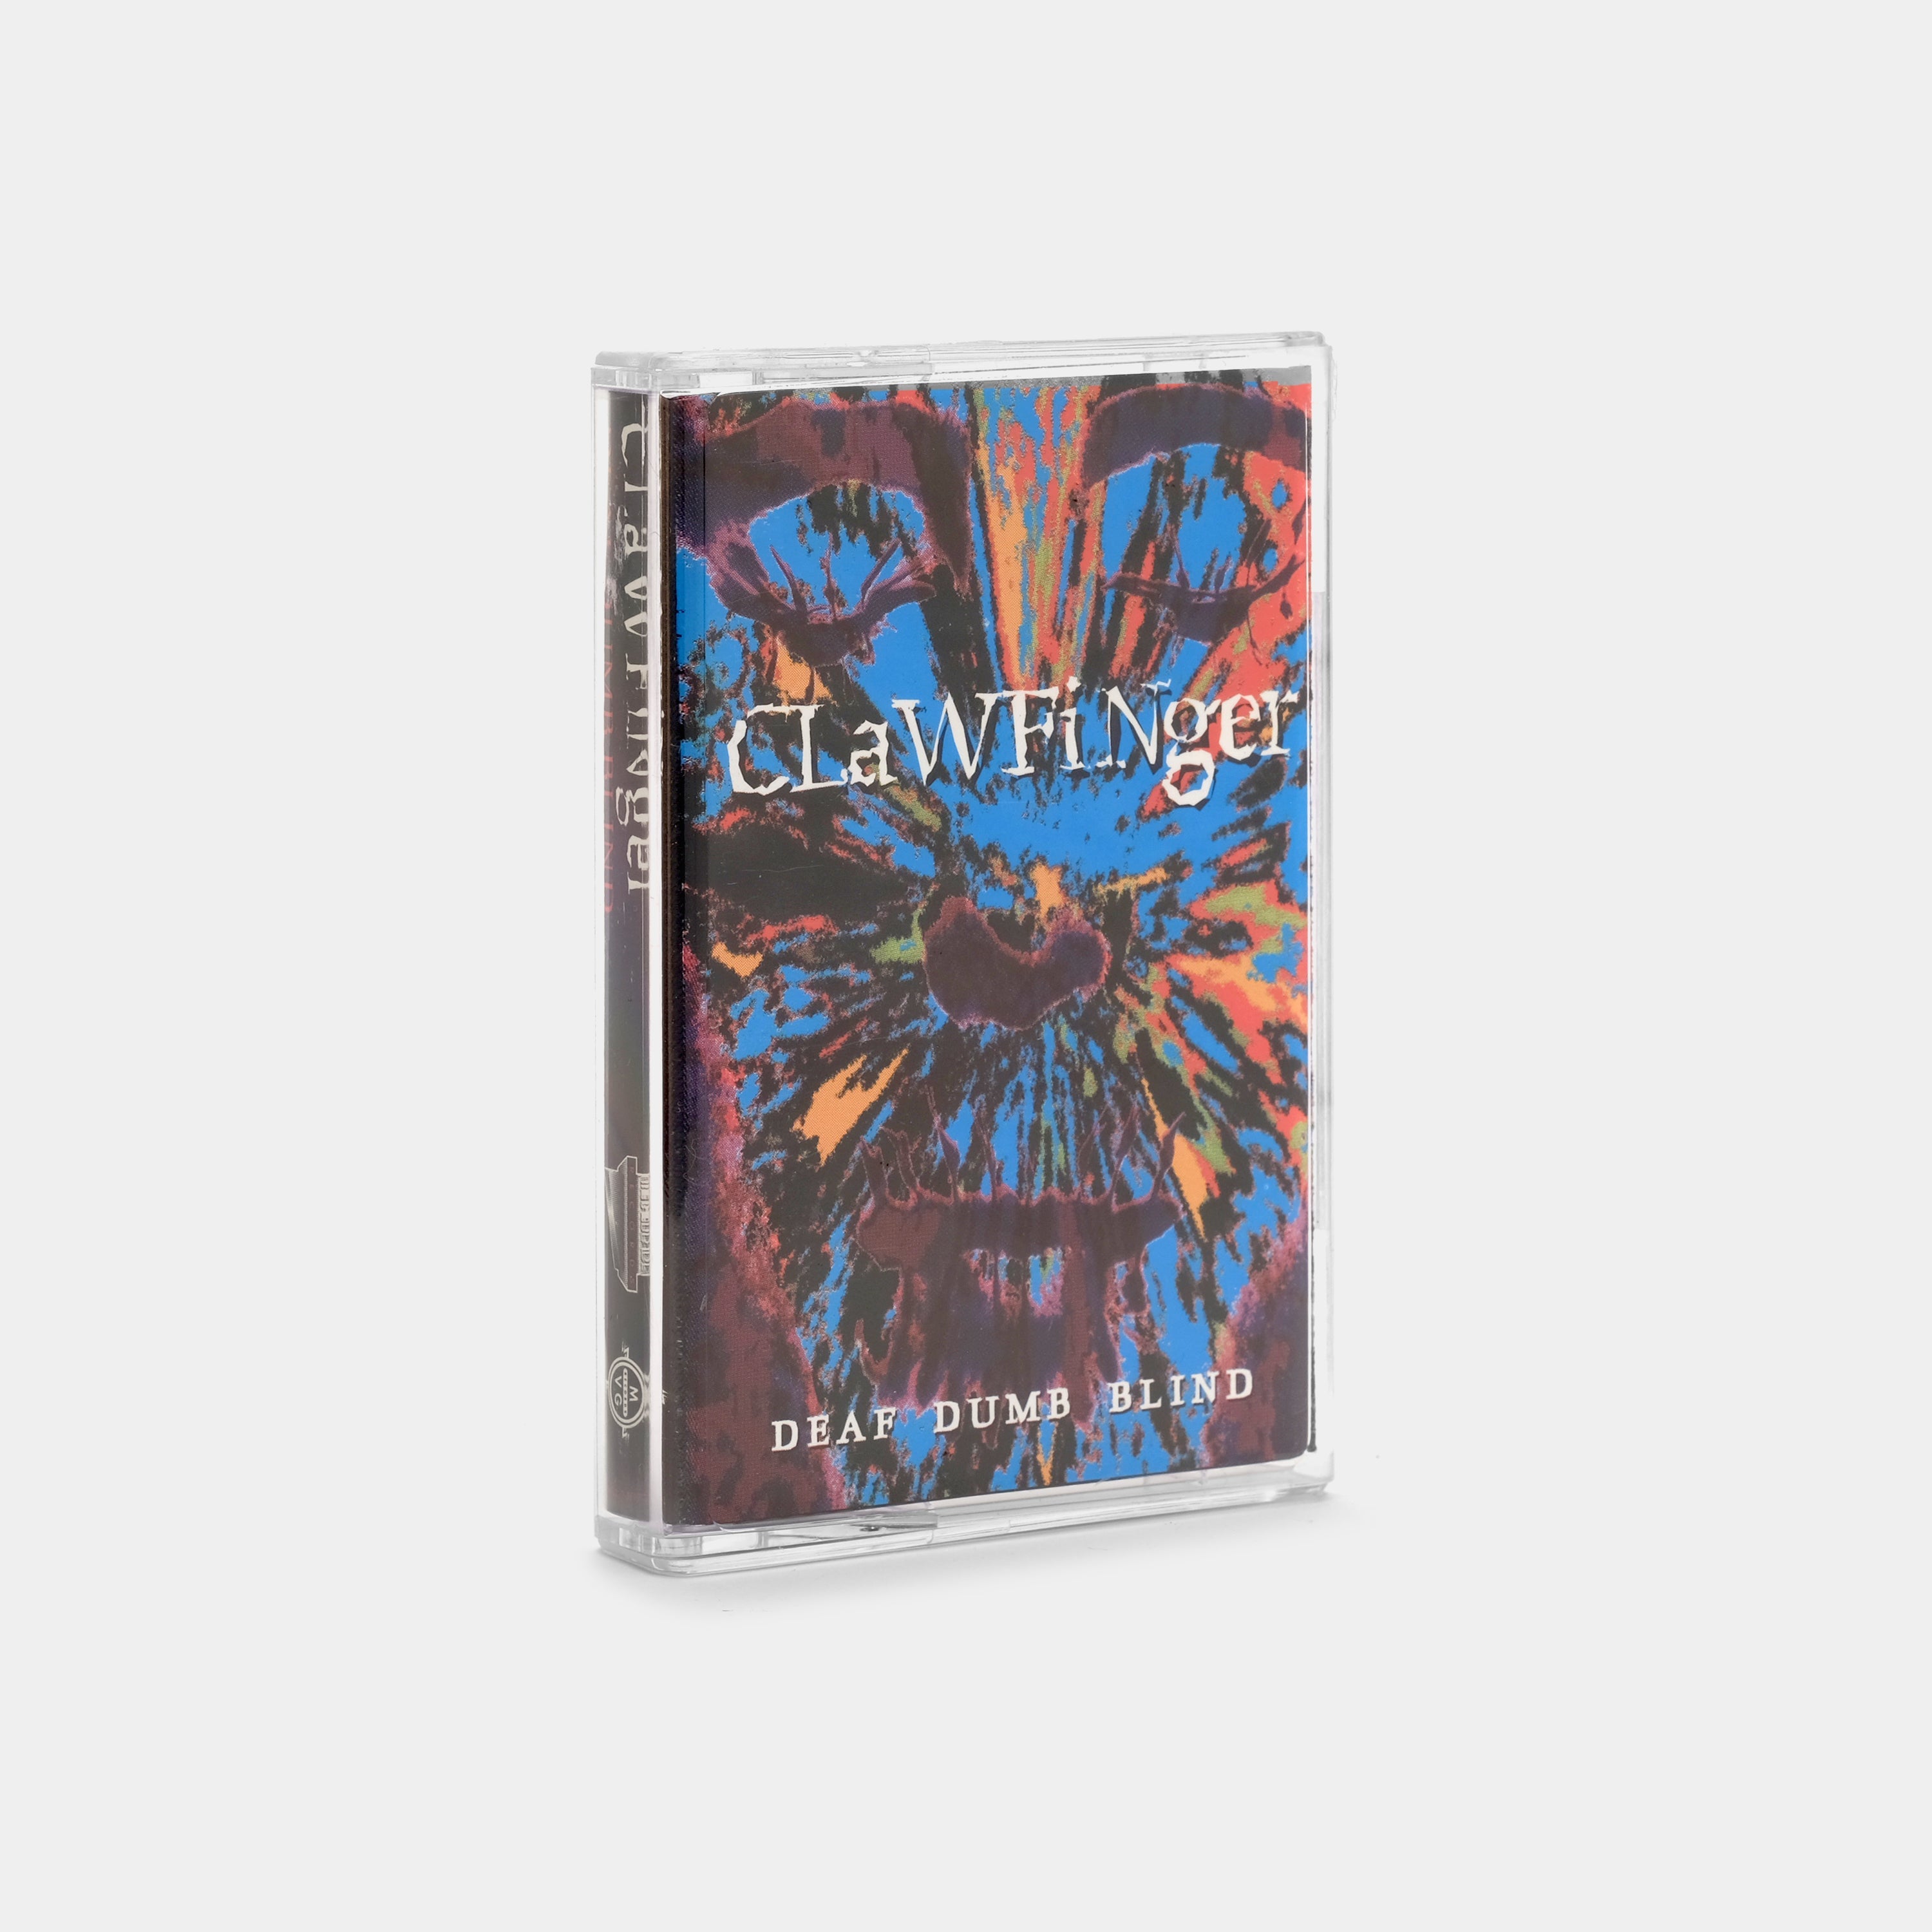 Clawfinger - Deaf Dumb Blind Cassette Tape